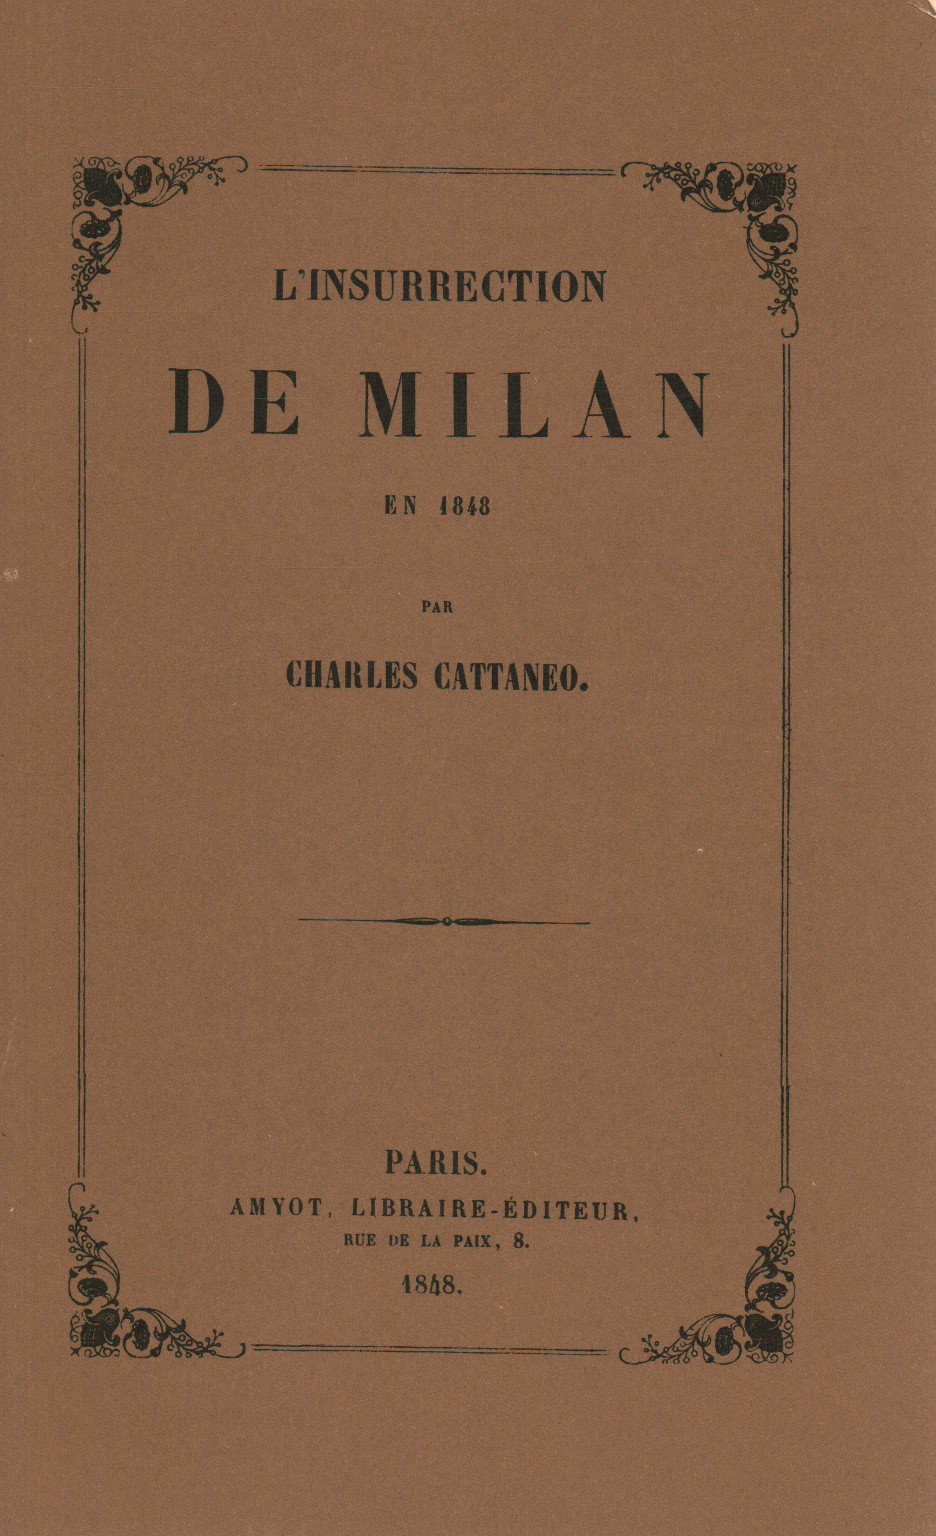 L'insurrection de Milan in 1848, s.a.